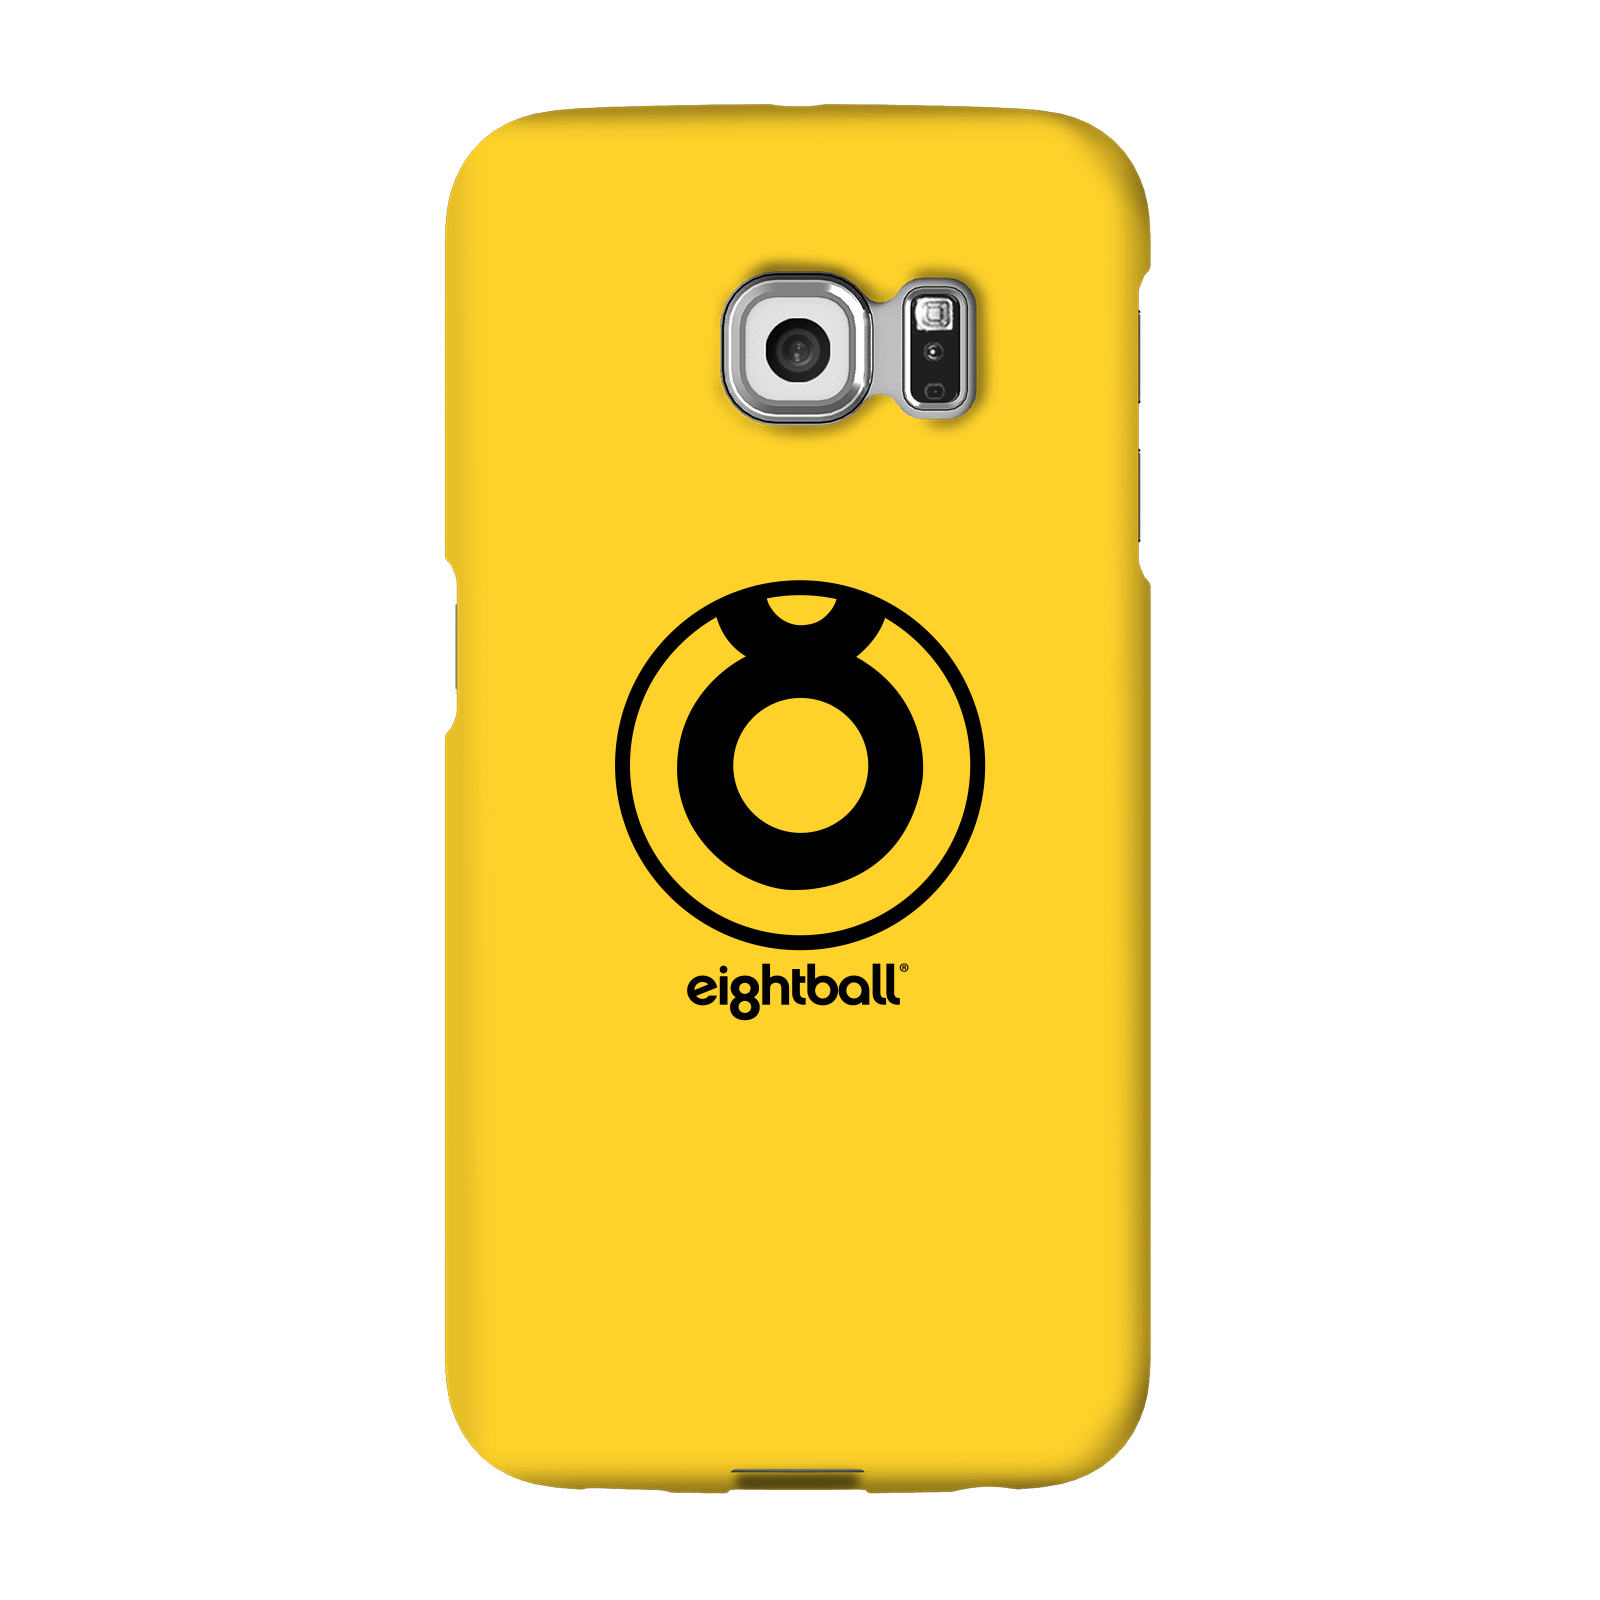 Funda Móvil Ei8htball Large Circle Logo para iPhone y Android - Samsung S6 Edge Plus - Carcasa rígida - Brillante